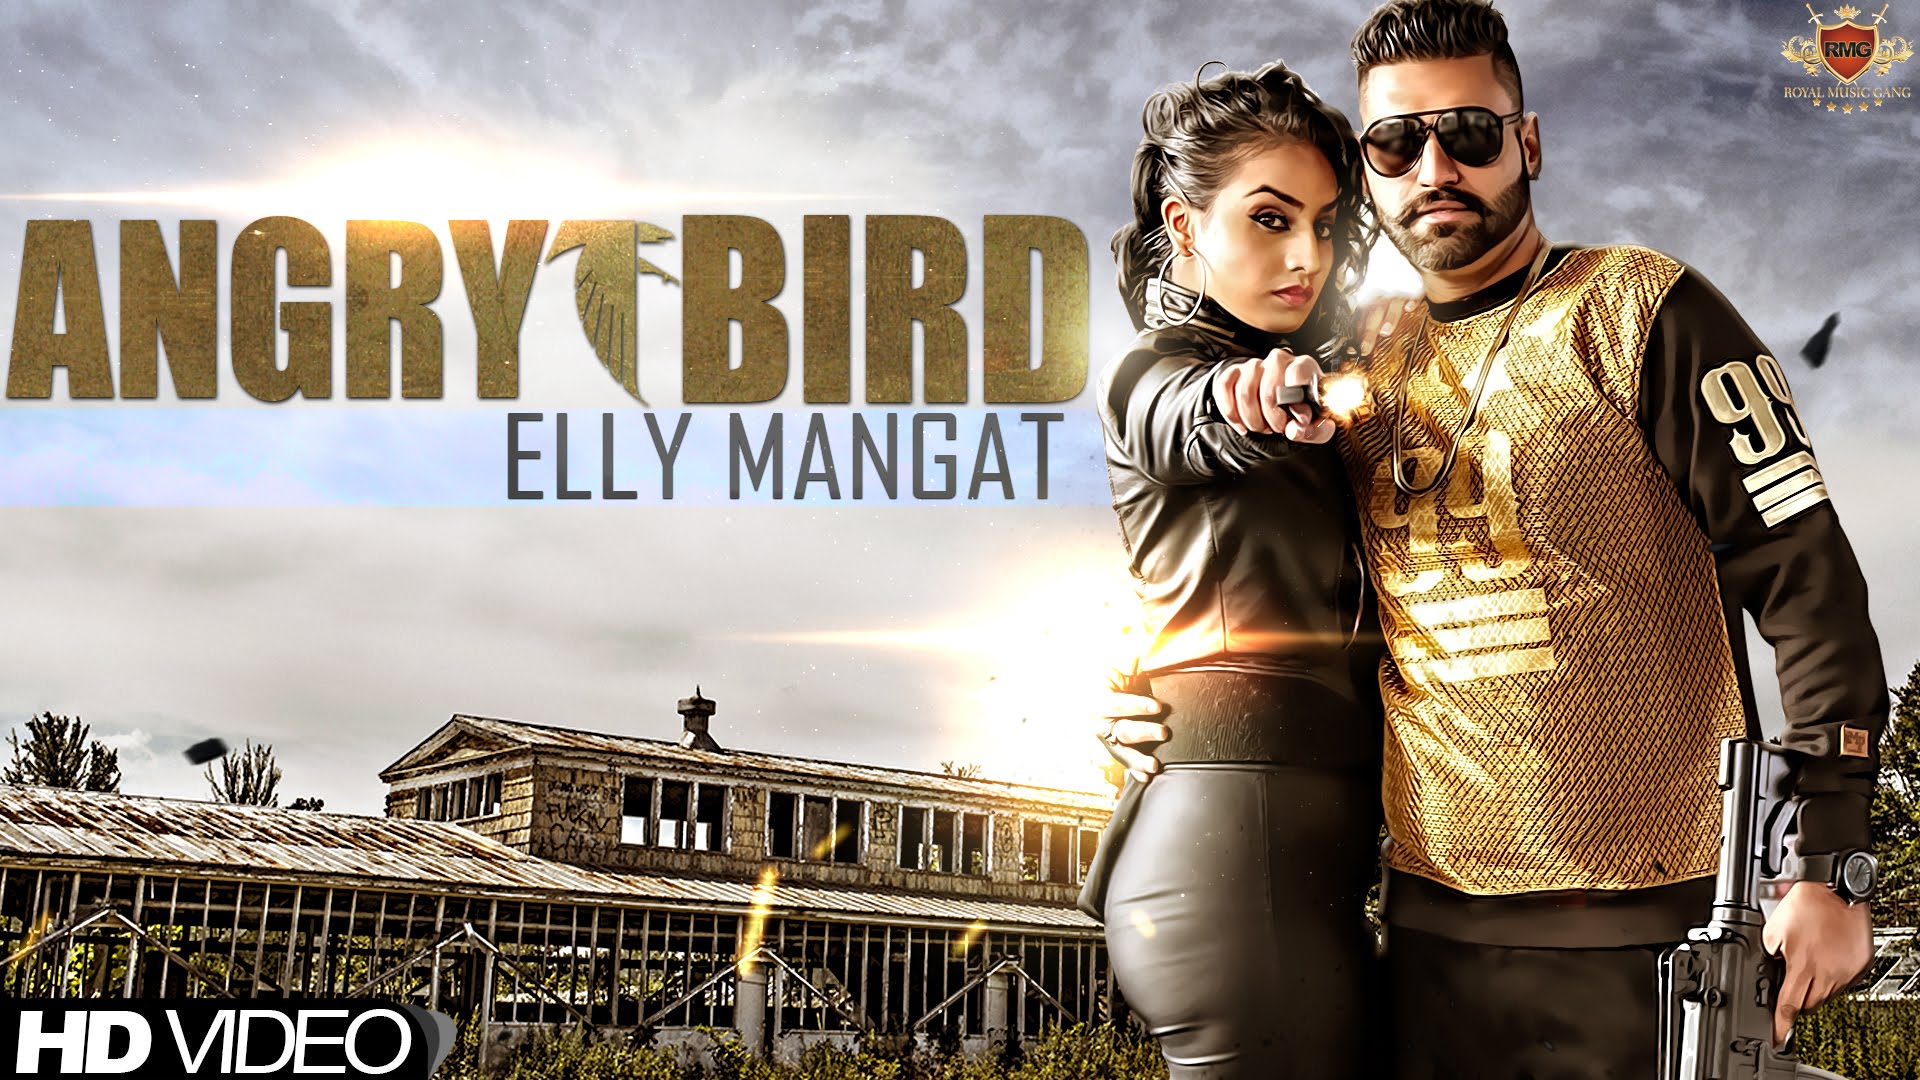 Angry Bird - Elly Mangat